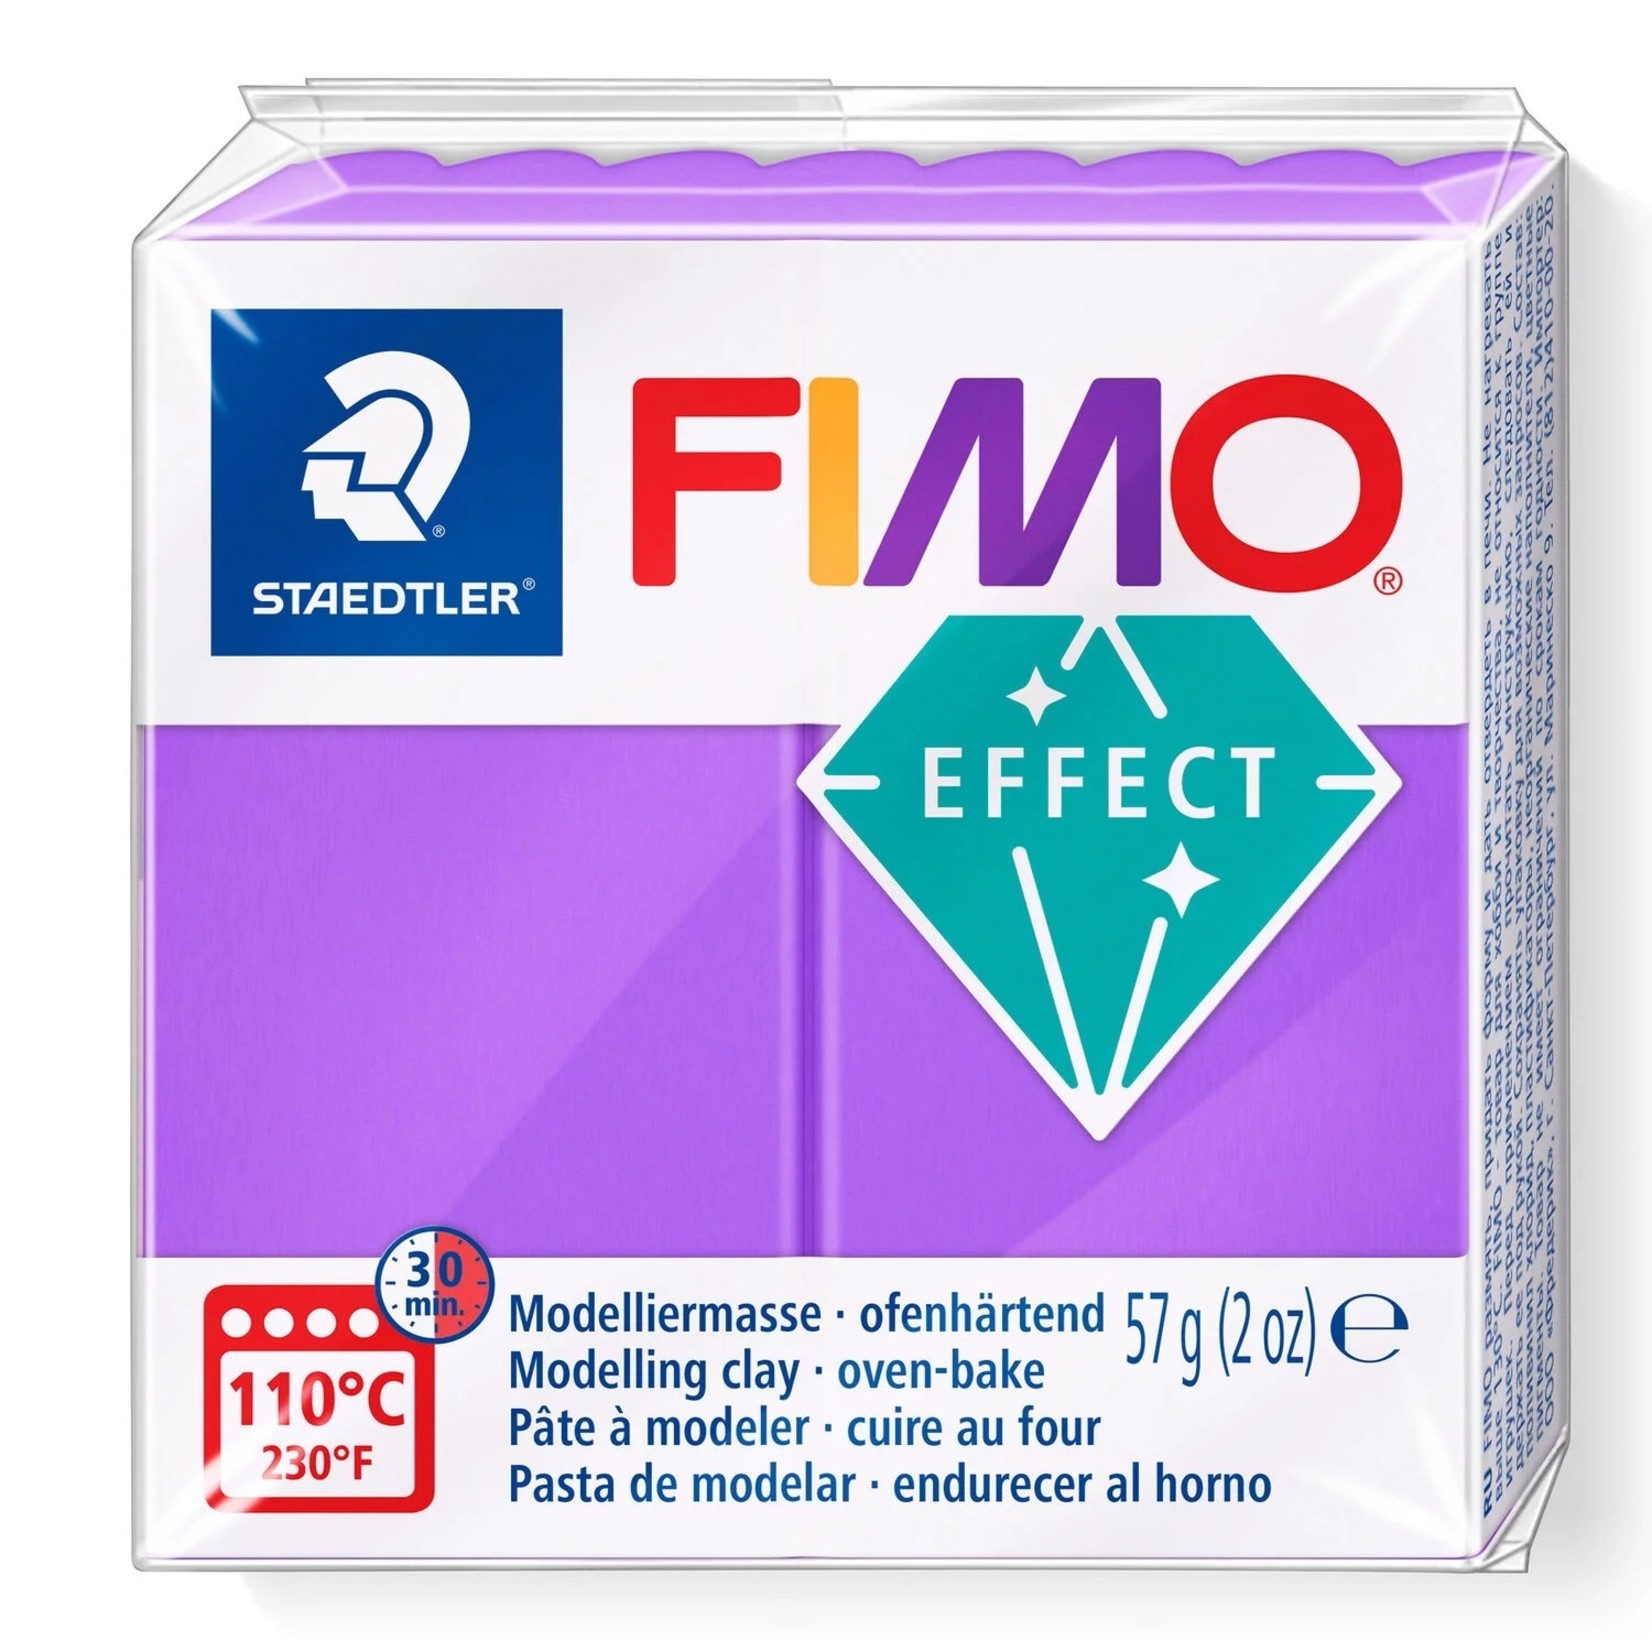 STAEDTLER FIMO EFFECT TRANSLUCENT 604 PURPLE